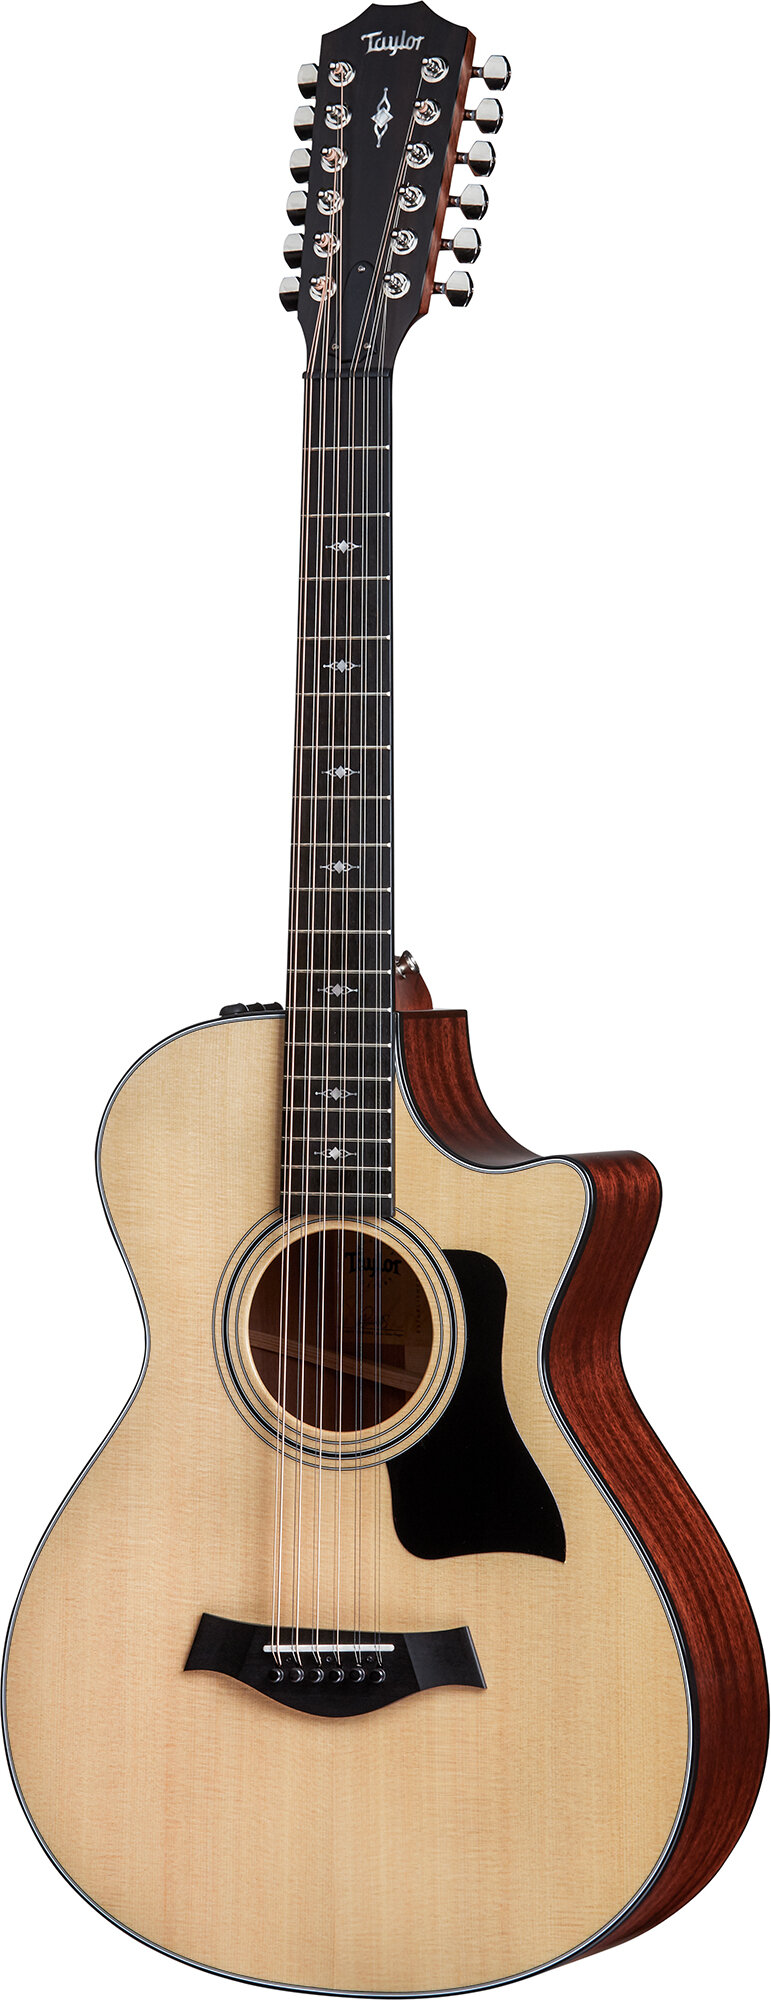 Taylor Guitars 352ce